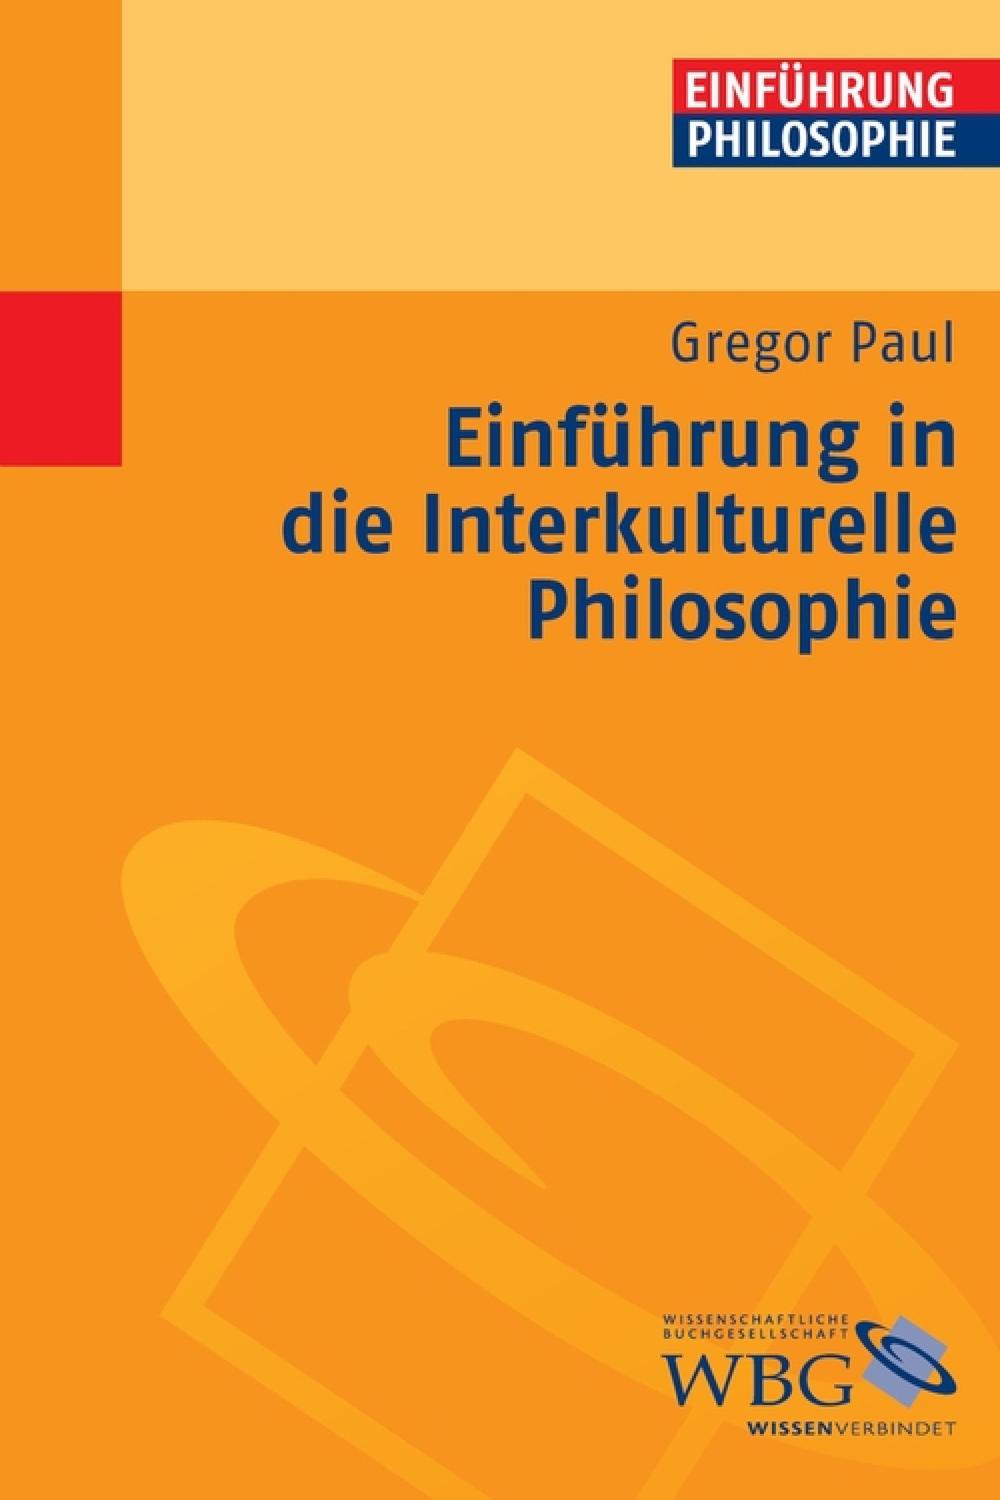 Einführung in die interkulturelle Philosophie - Gregor Paul